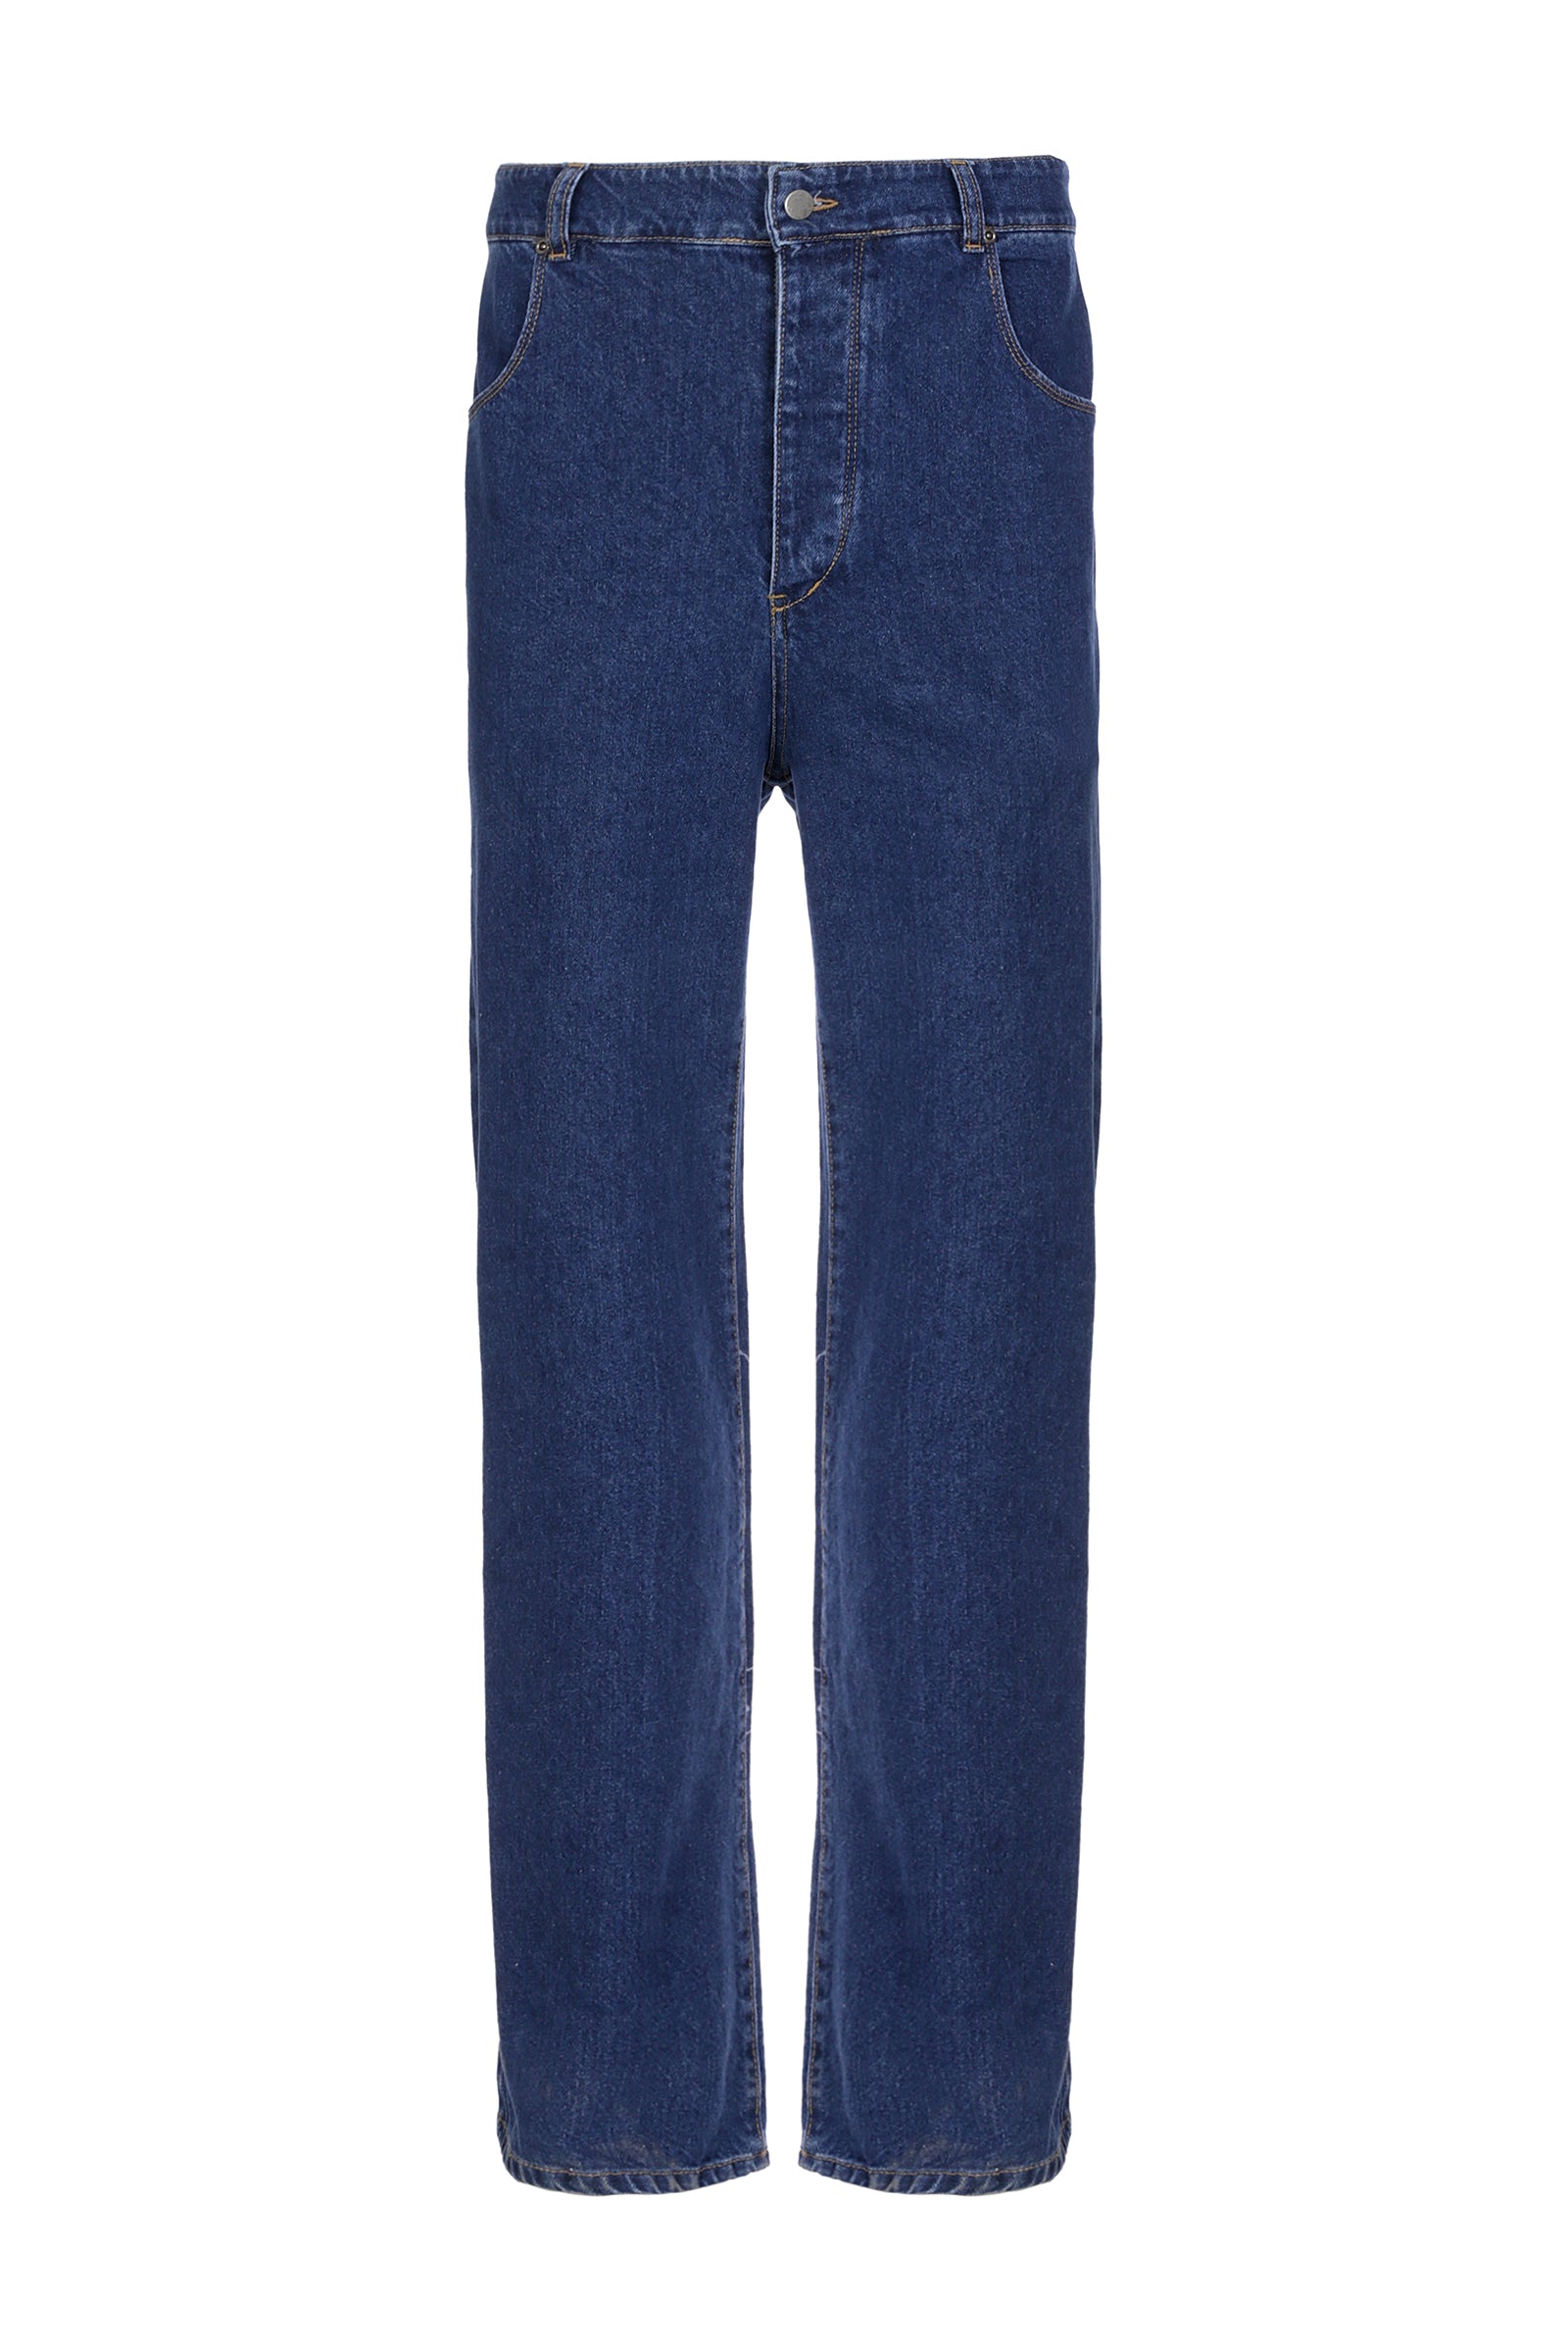 Straight leg blue jeans